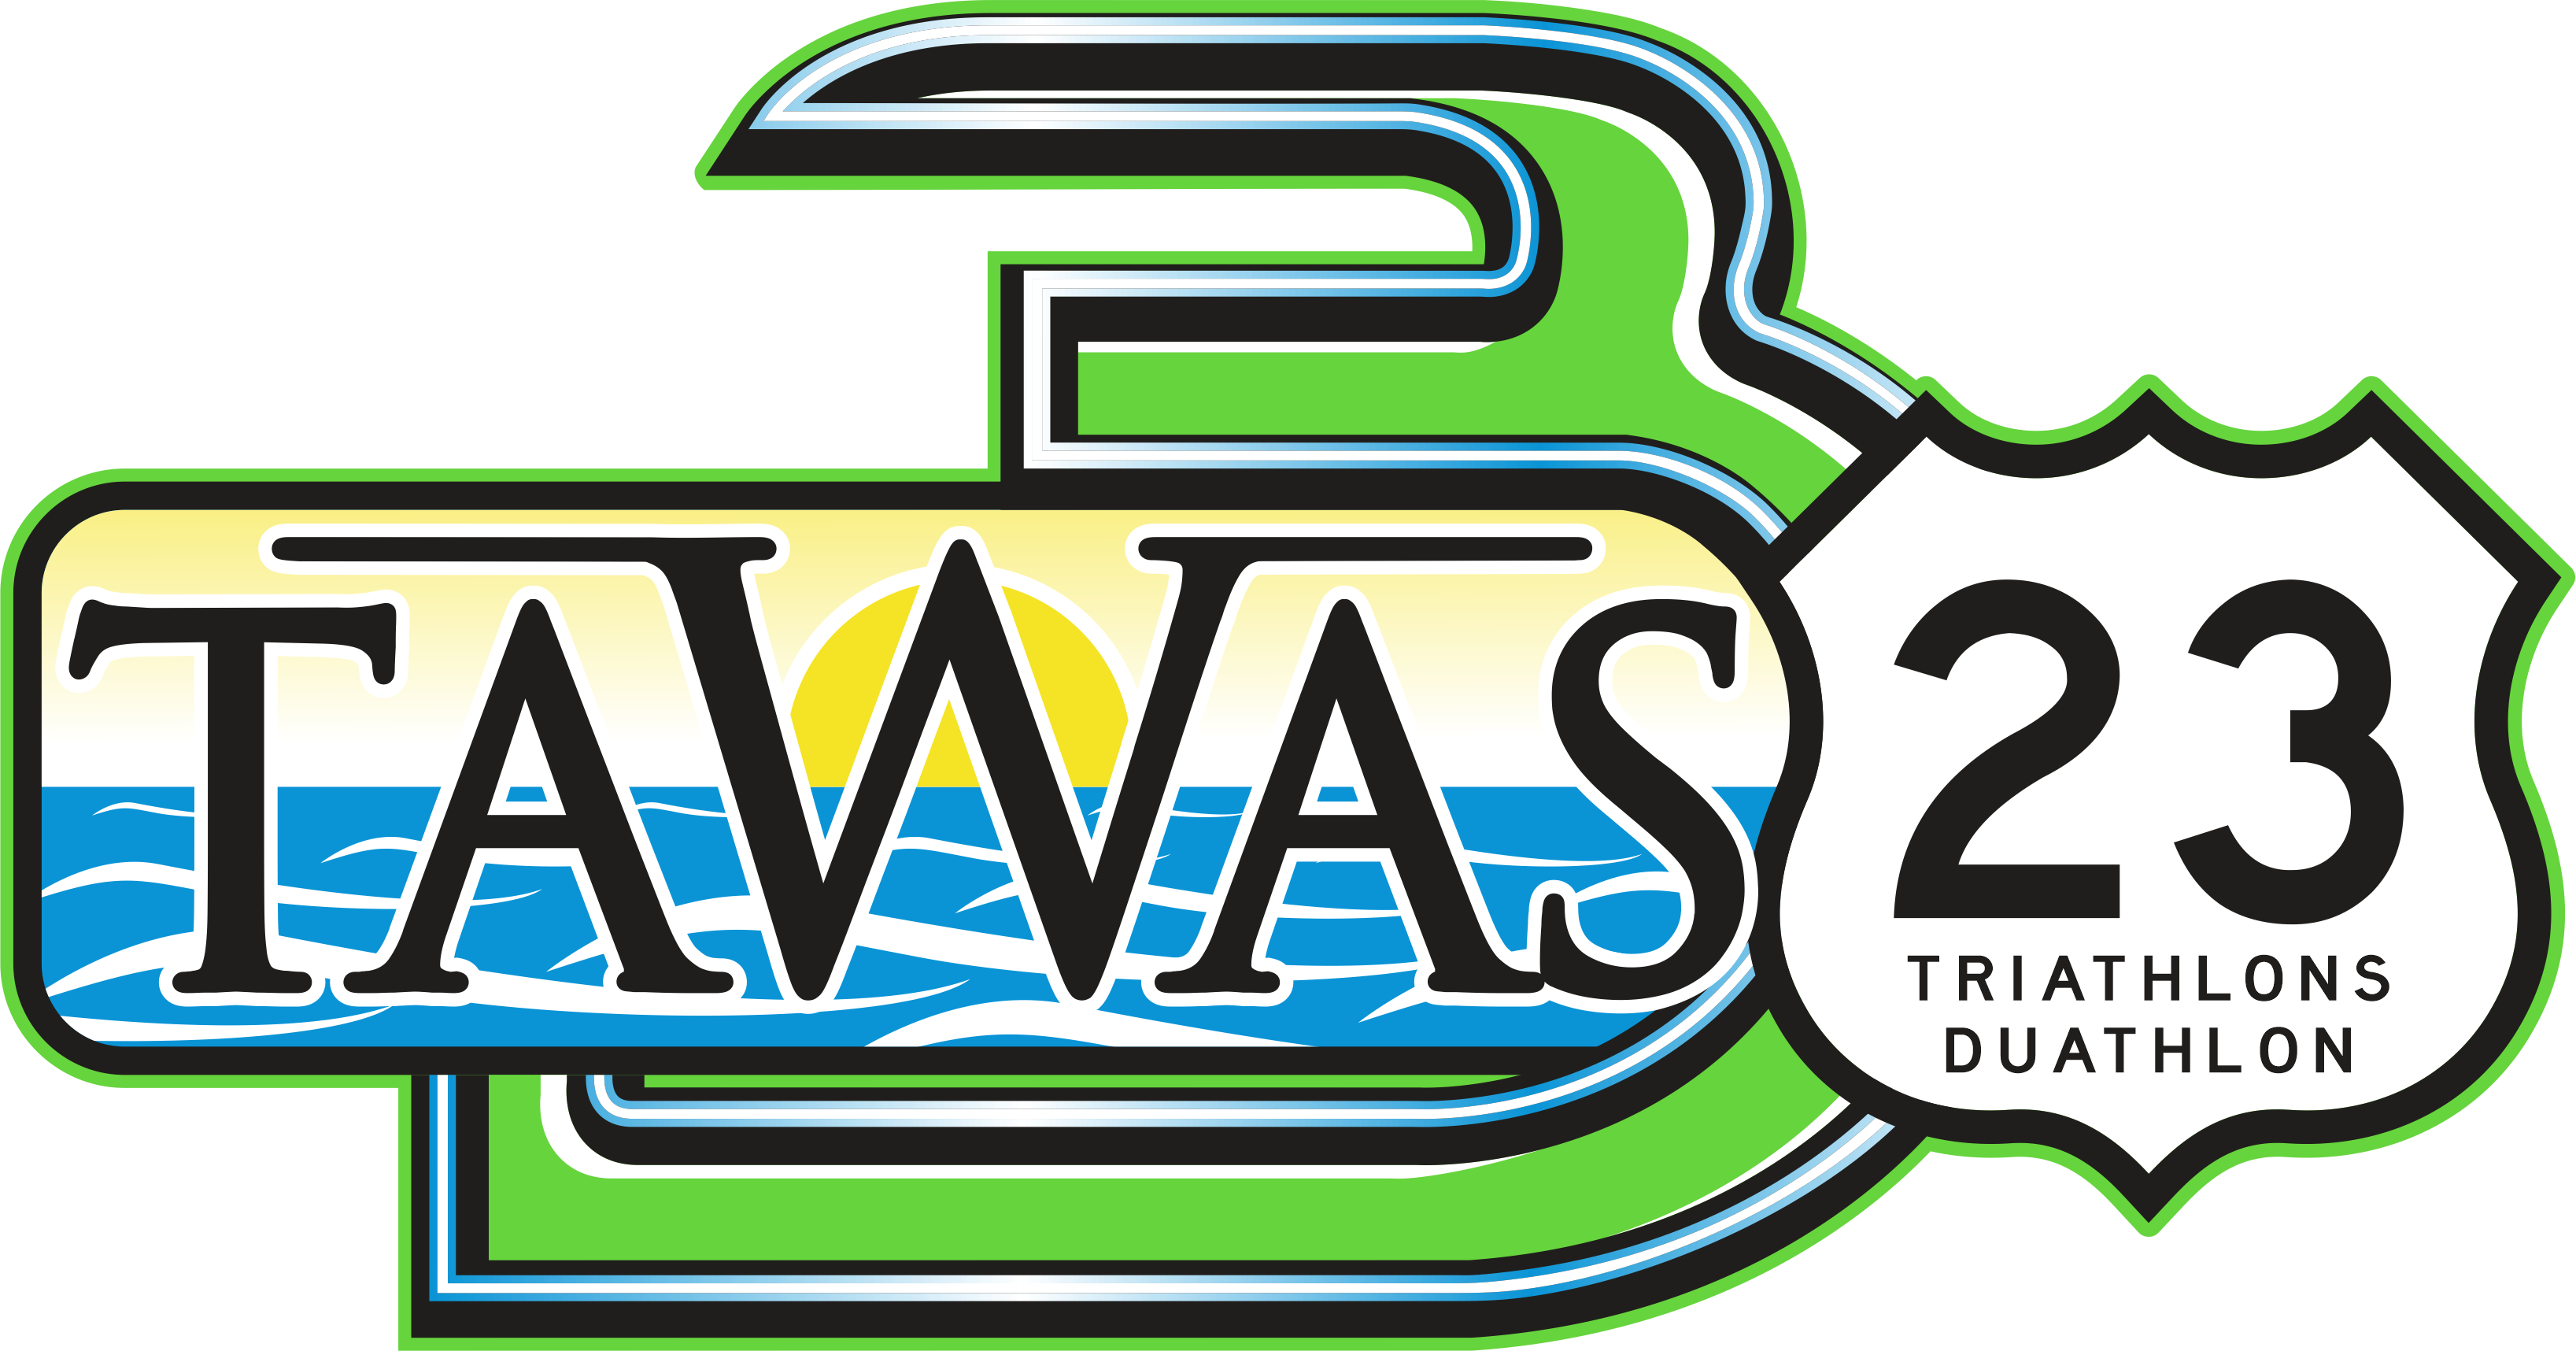 3-Disciplines-Tawas-23-Triathlons-City FAQ Information